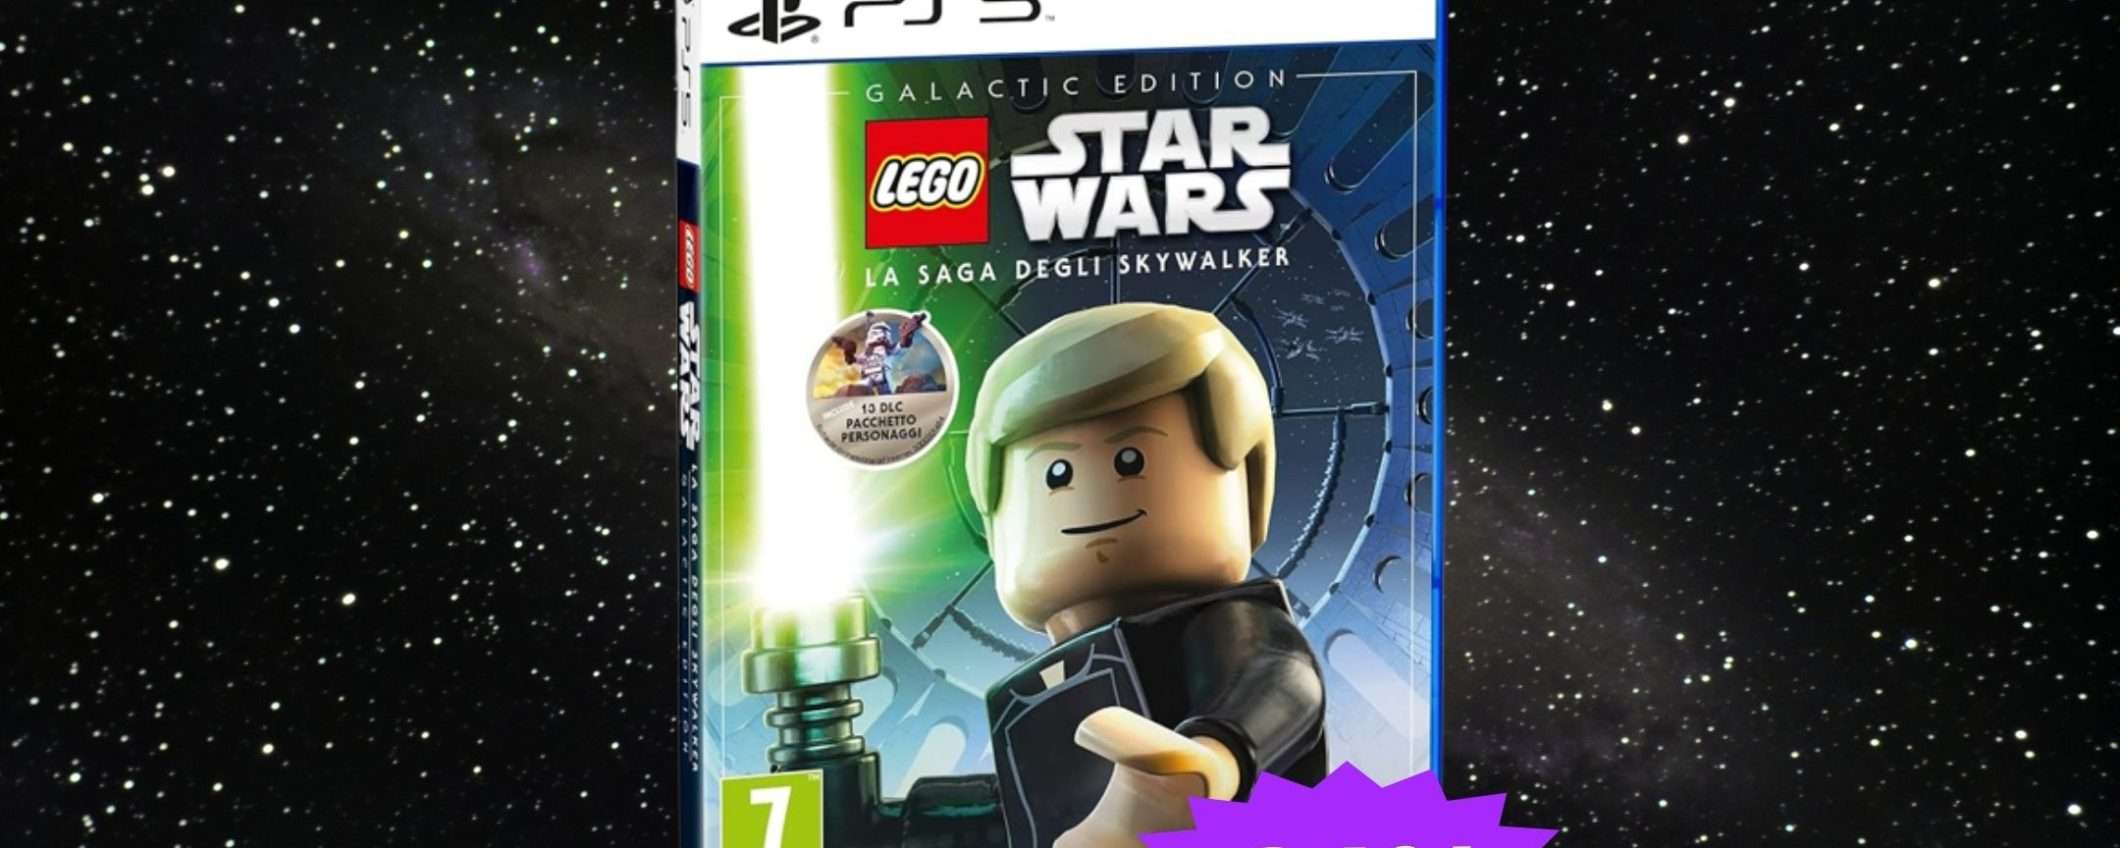 LEGO STAR WARS Galactic Edition PS5: MEGA sconto del 31%